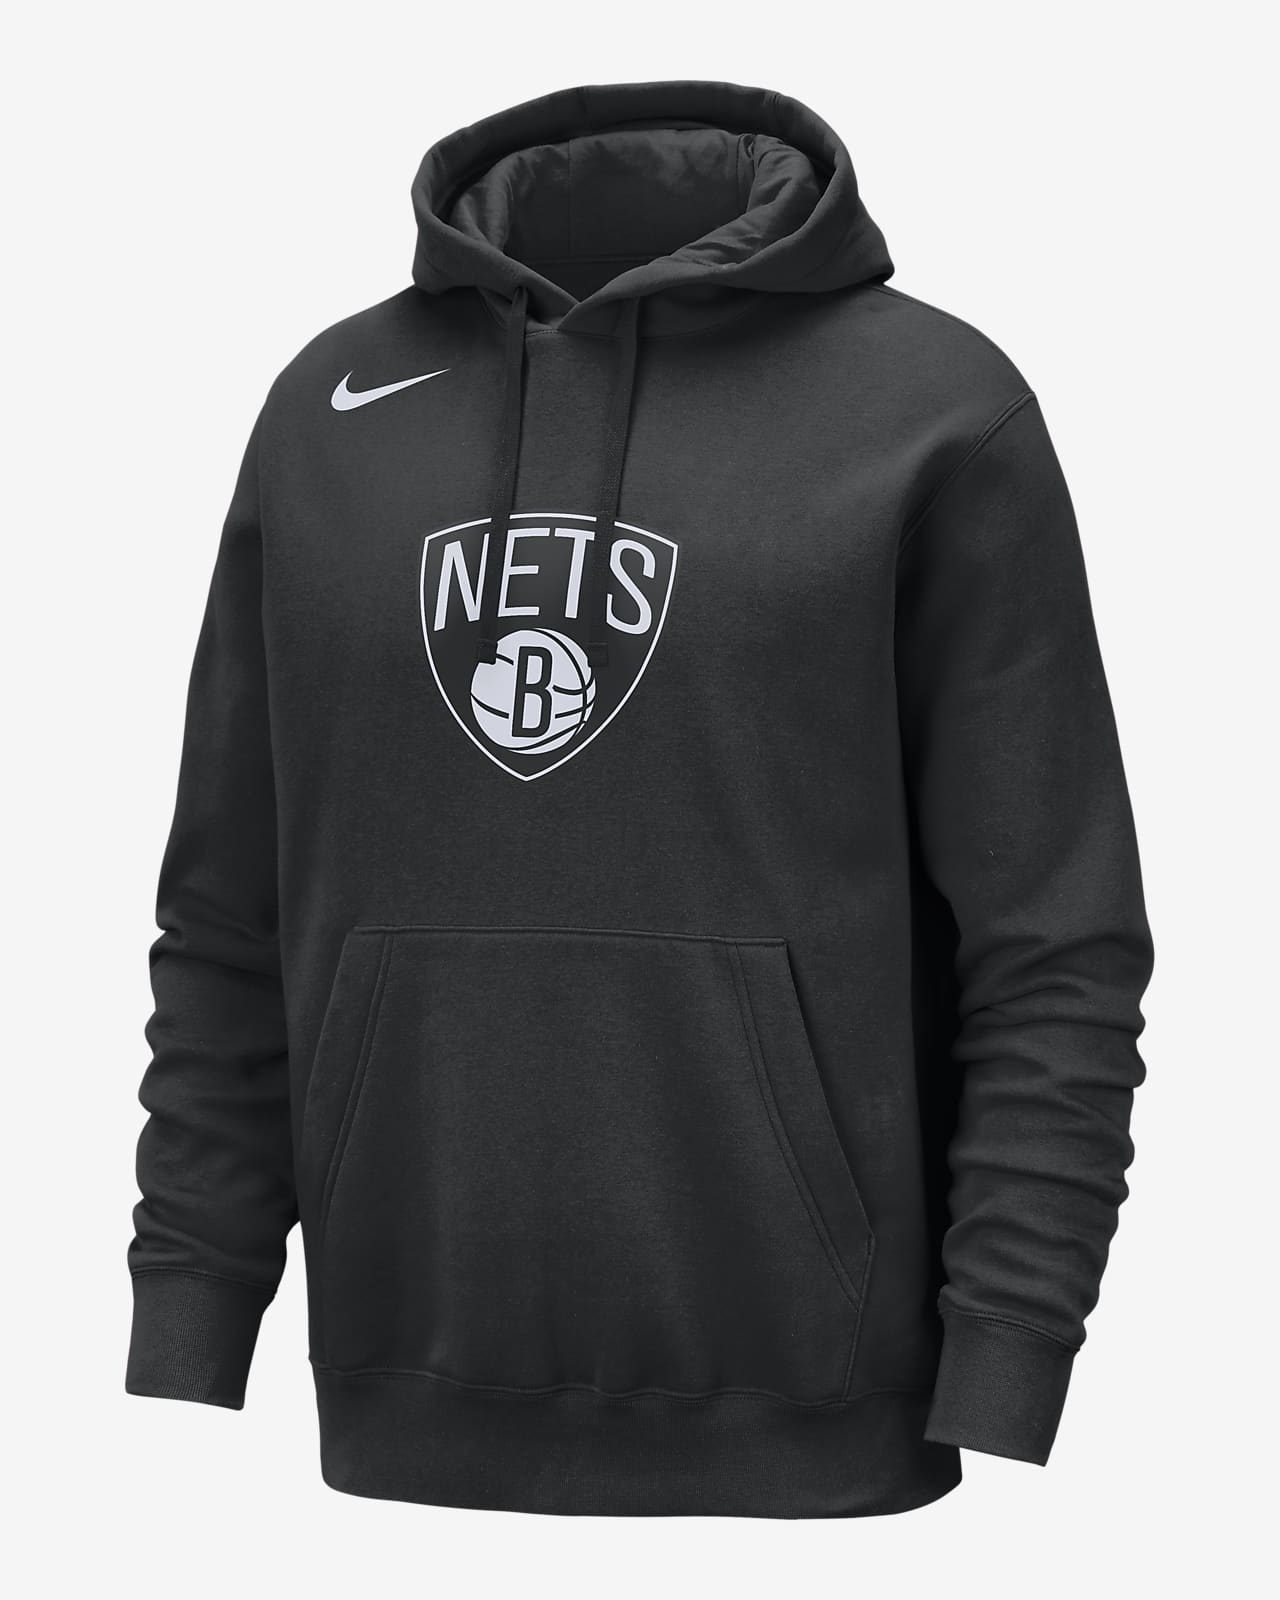 Pánská mikina Nike NBA Brooklyn Nets Club s kapucí